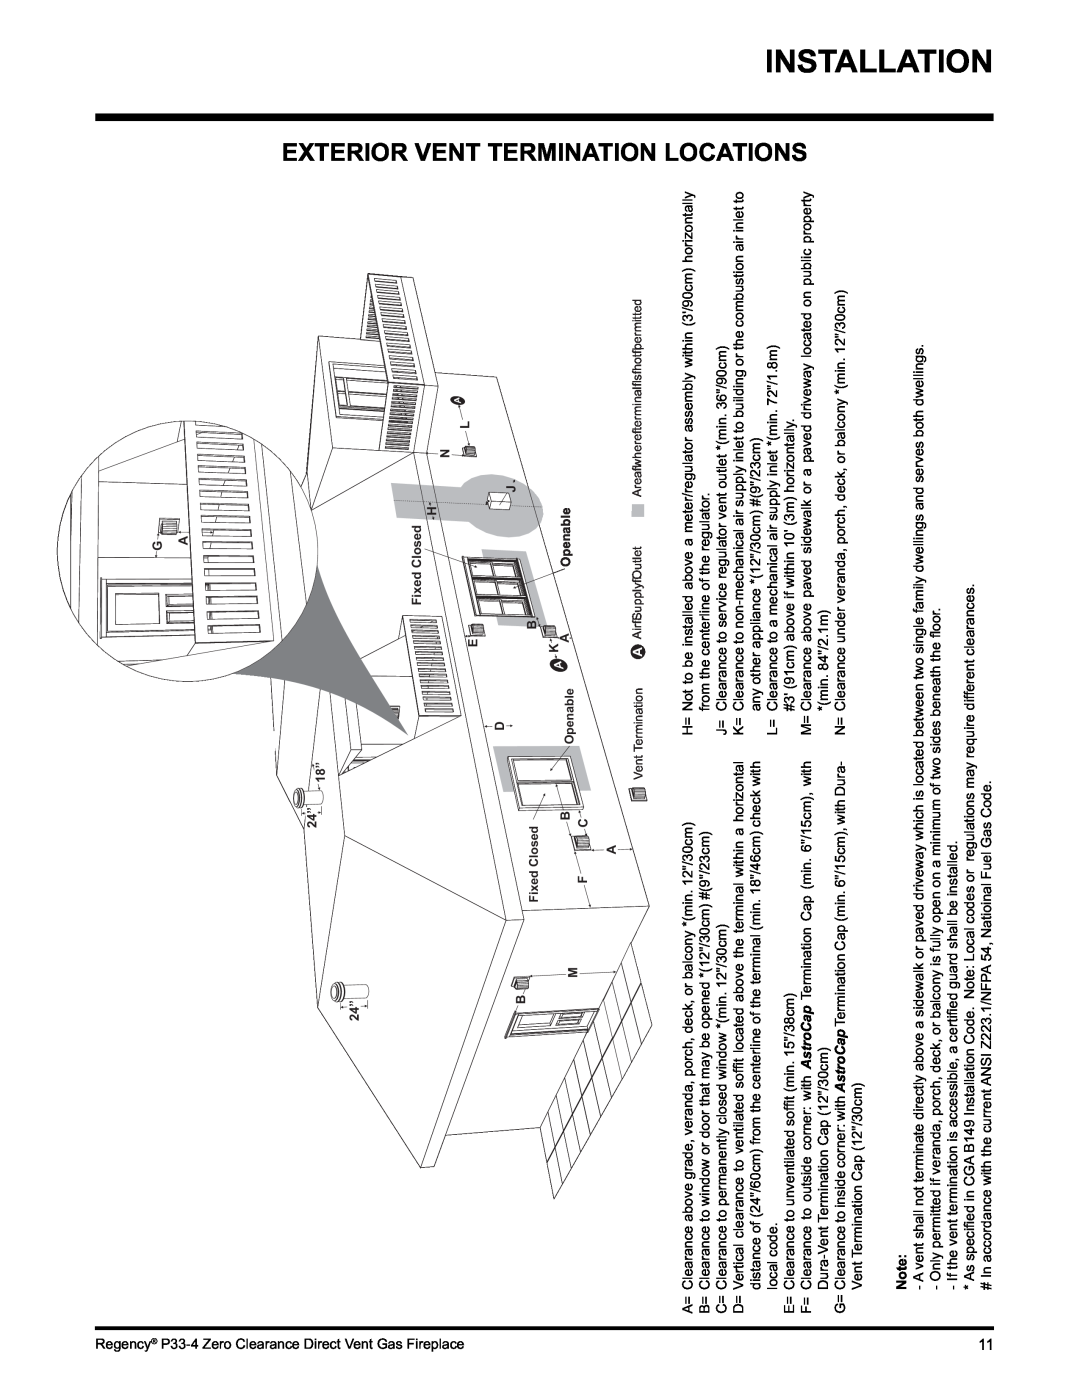 Regency P33-NG4 installation manual Exterior Vent Termination Locations 